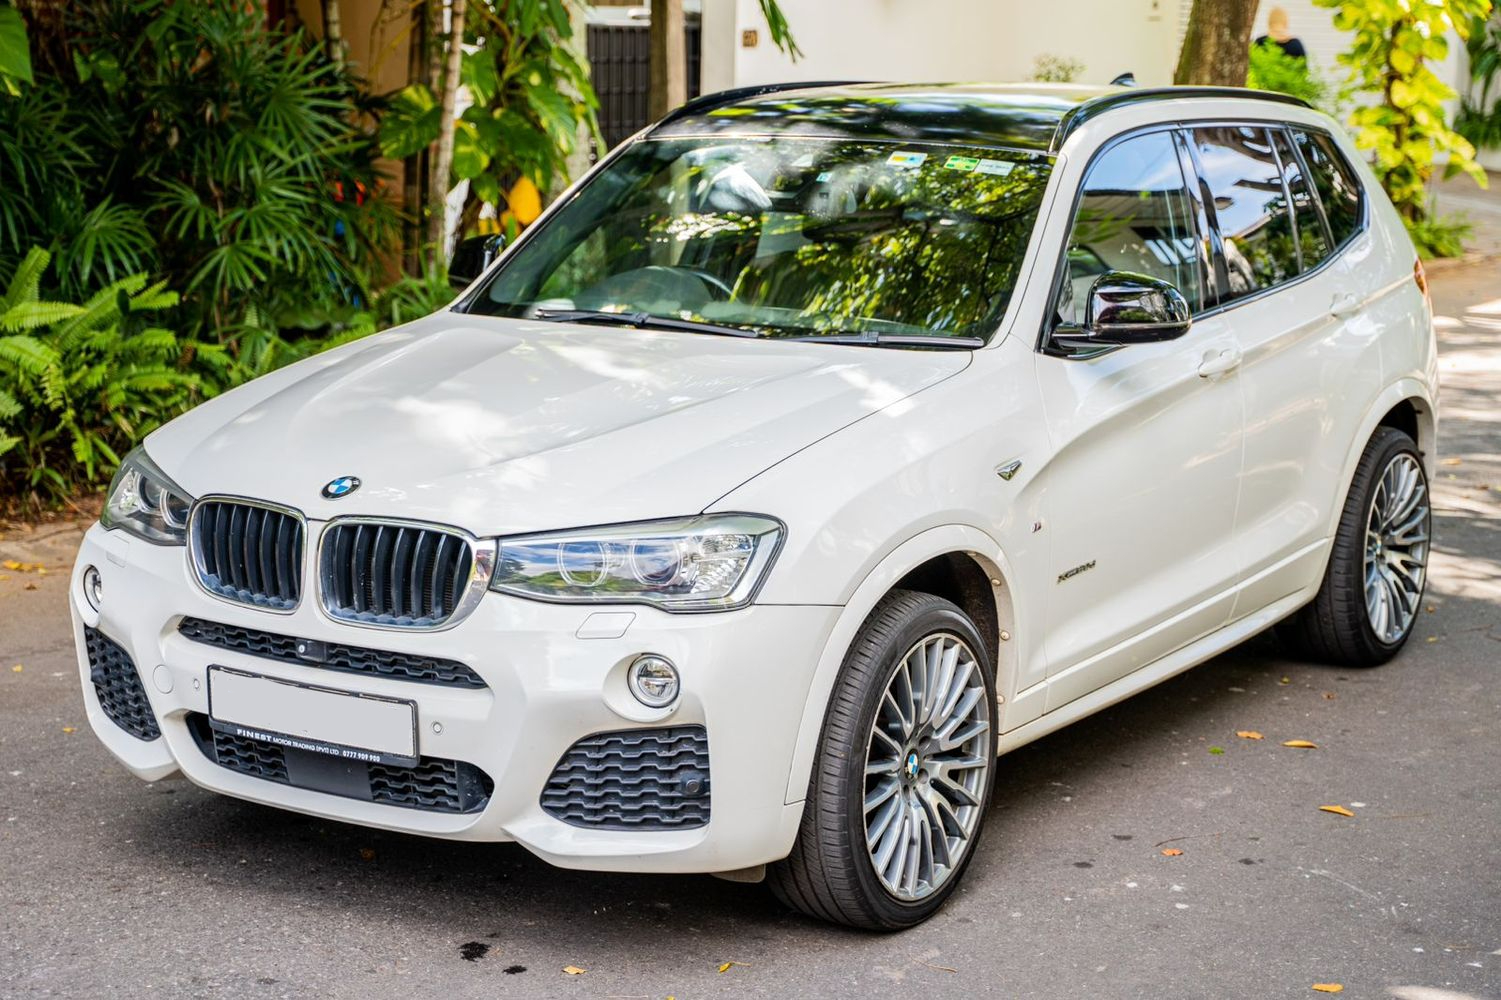 BMW X3 M Sport 2015 Review